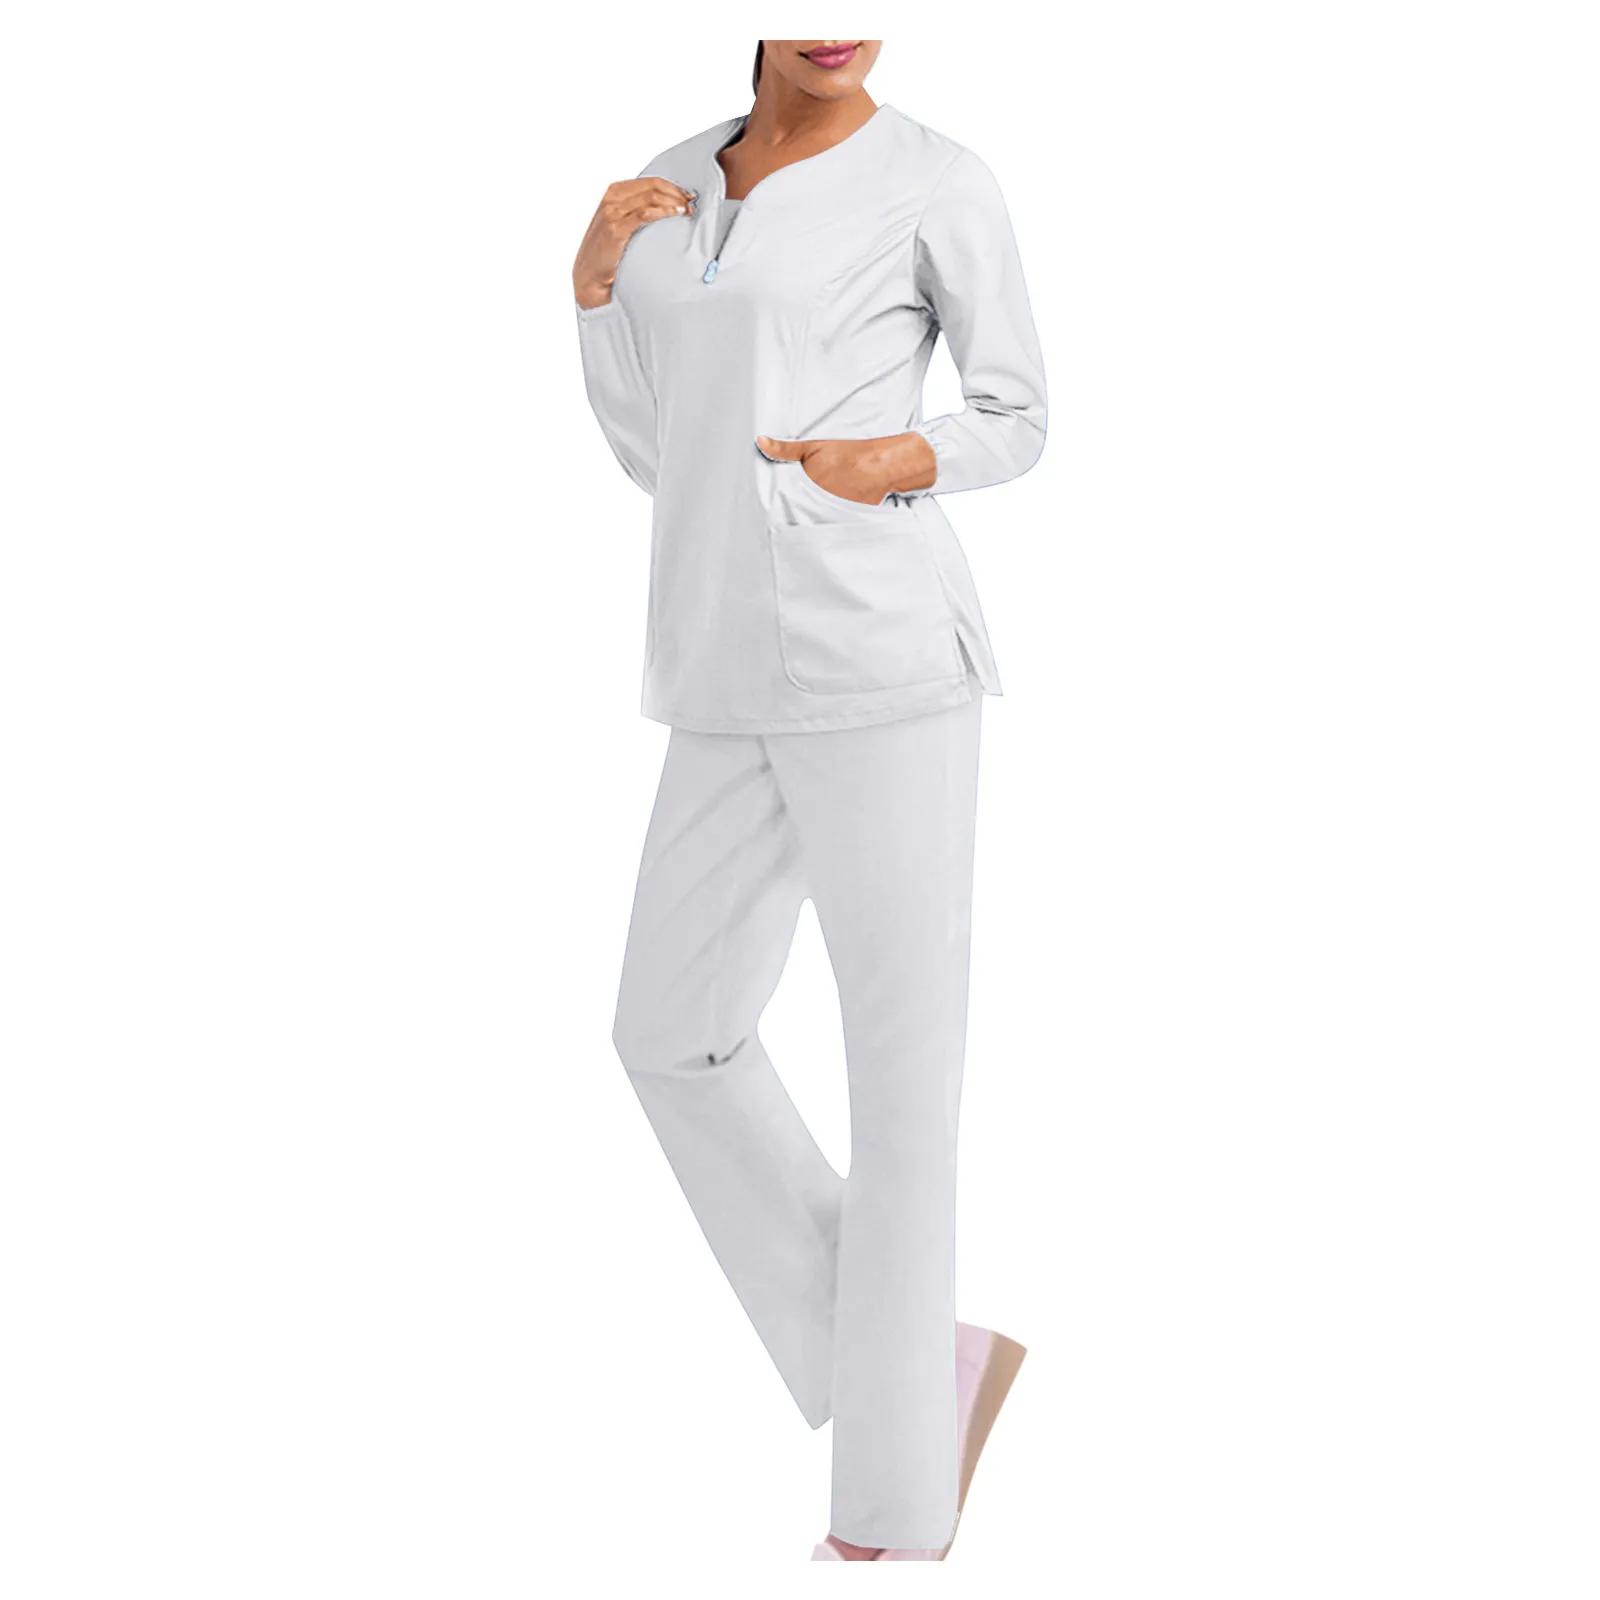 Scrubs Women Nurse Working Uniform Pocket Long Sleeves Medicaled Clothing Tops+long Pants Two-piece Sets Clinical Uniforms Suit white short suit set Suits & Blazers